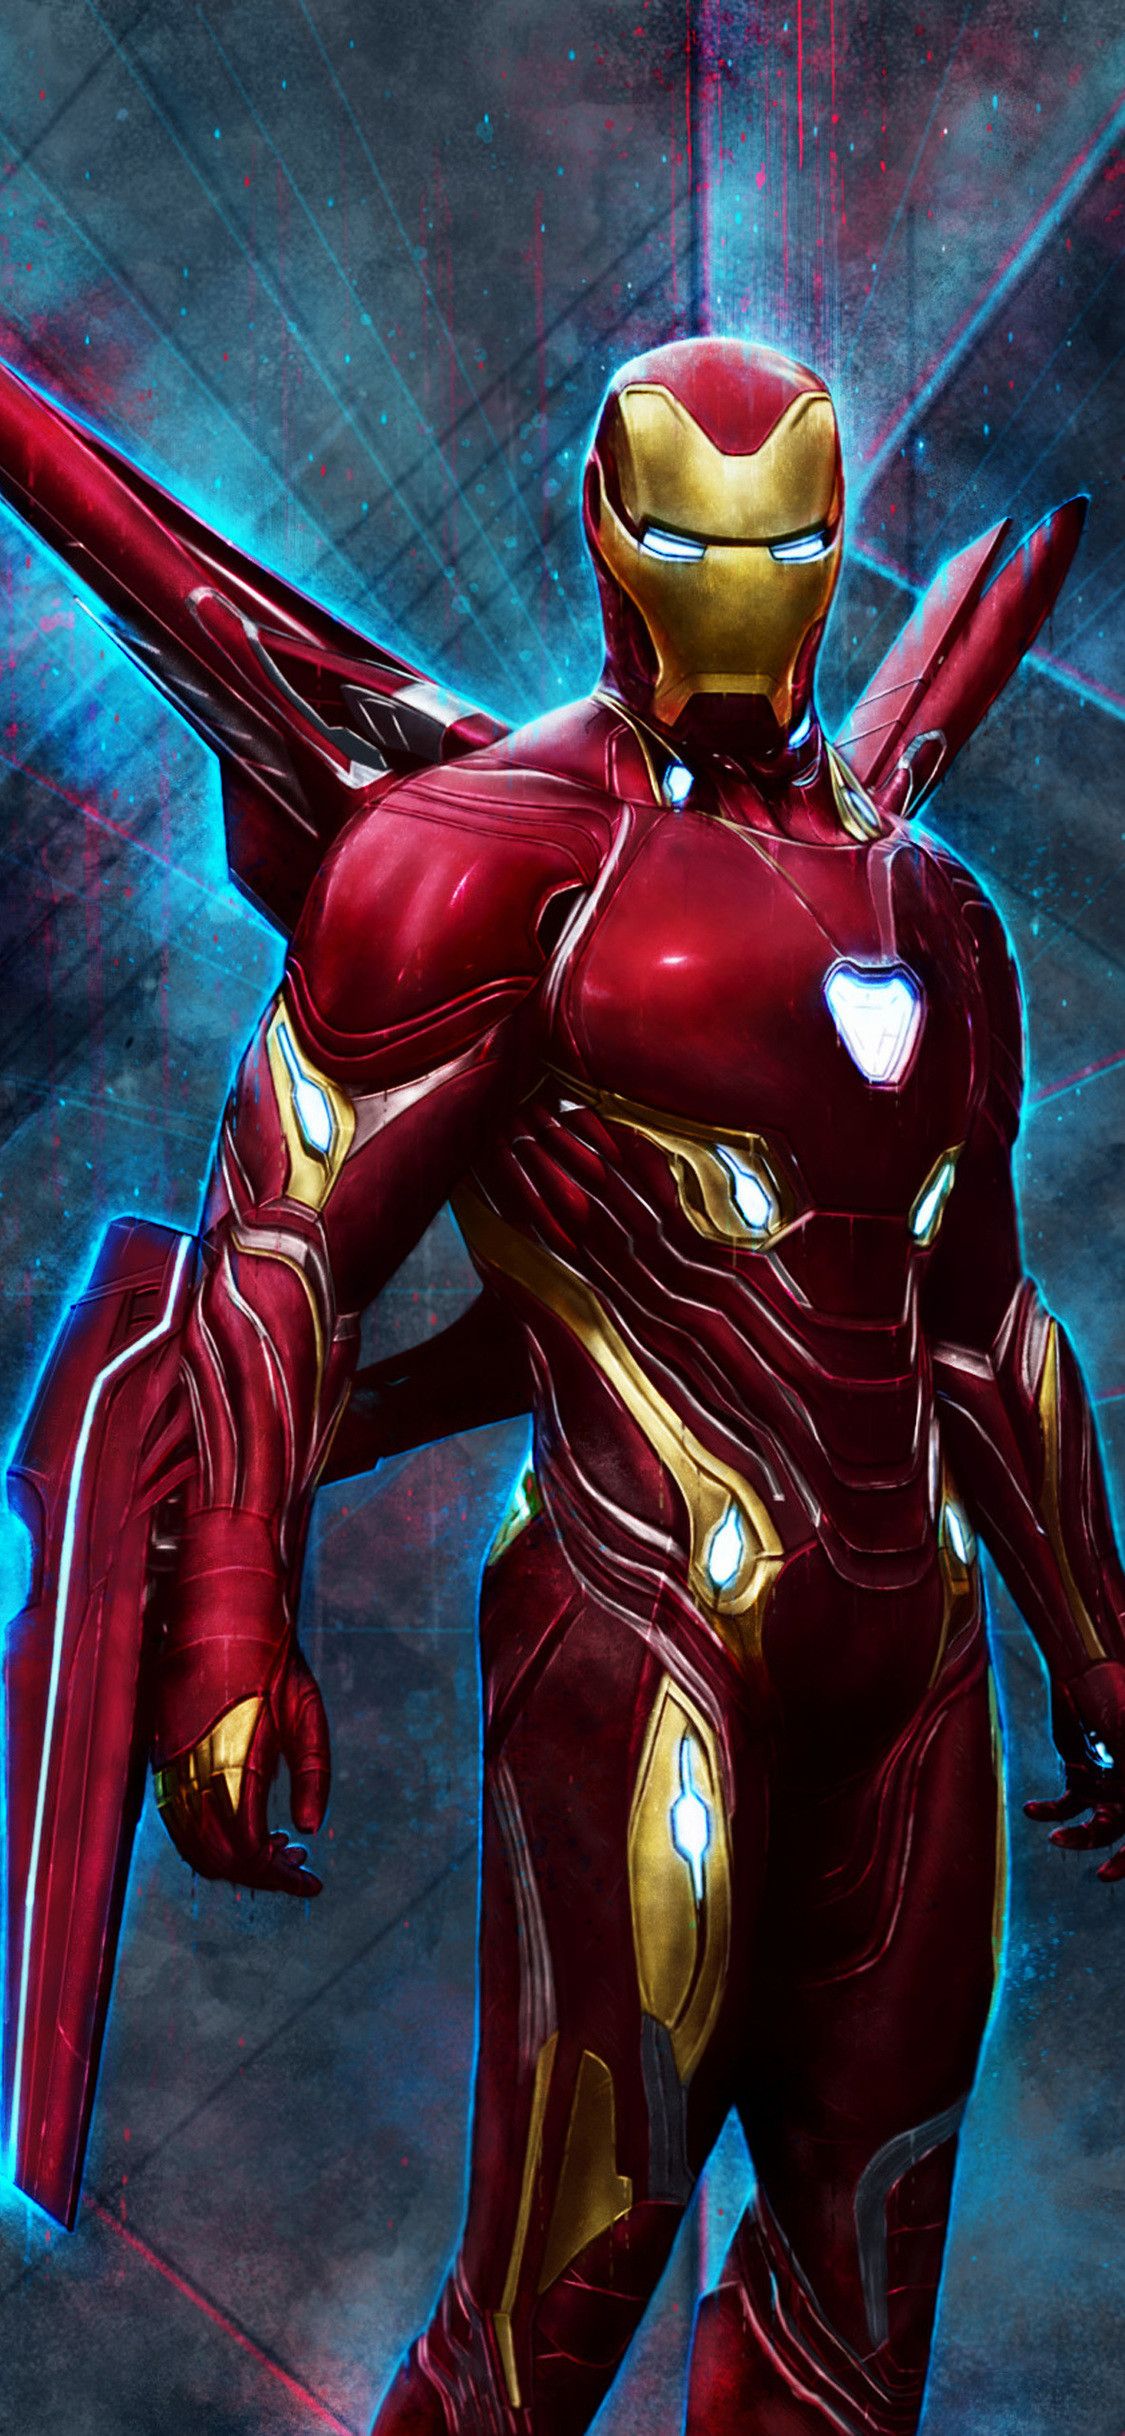 Free download Iron Man Wallpaper iPhone - [1125x2436] for your Desktop, Mobile & Tablet. Explore Iron Man iPhone X Wallpaper. Iron Man iPhone X Wallpaper, iPhone Wallpaper Iron